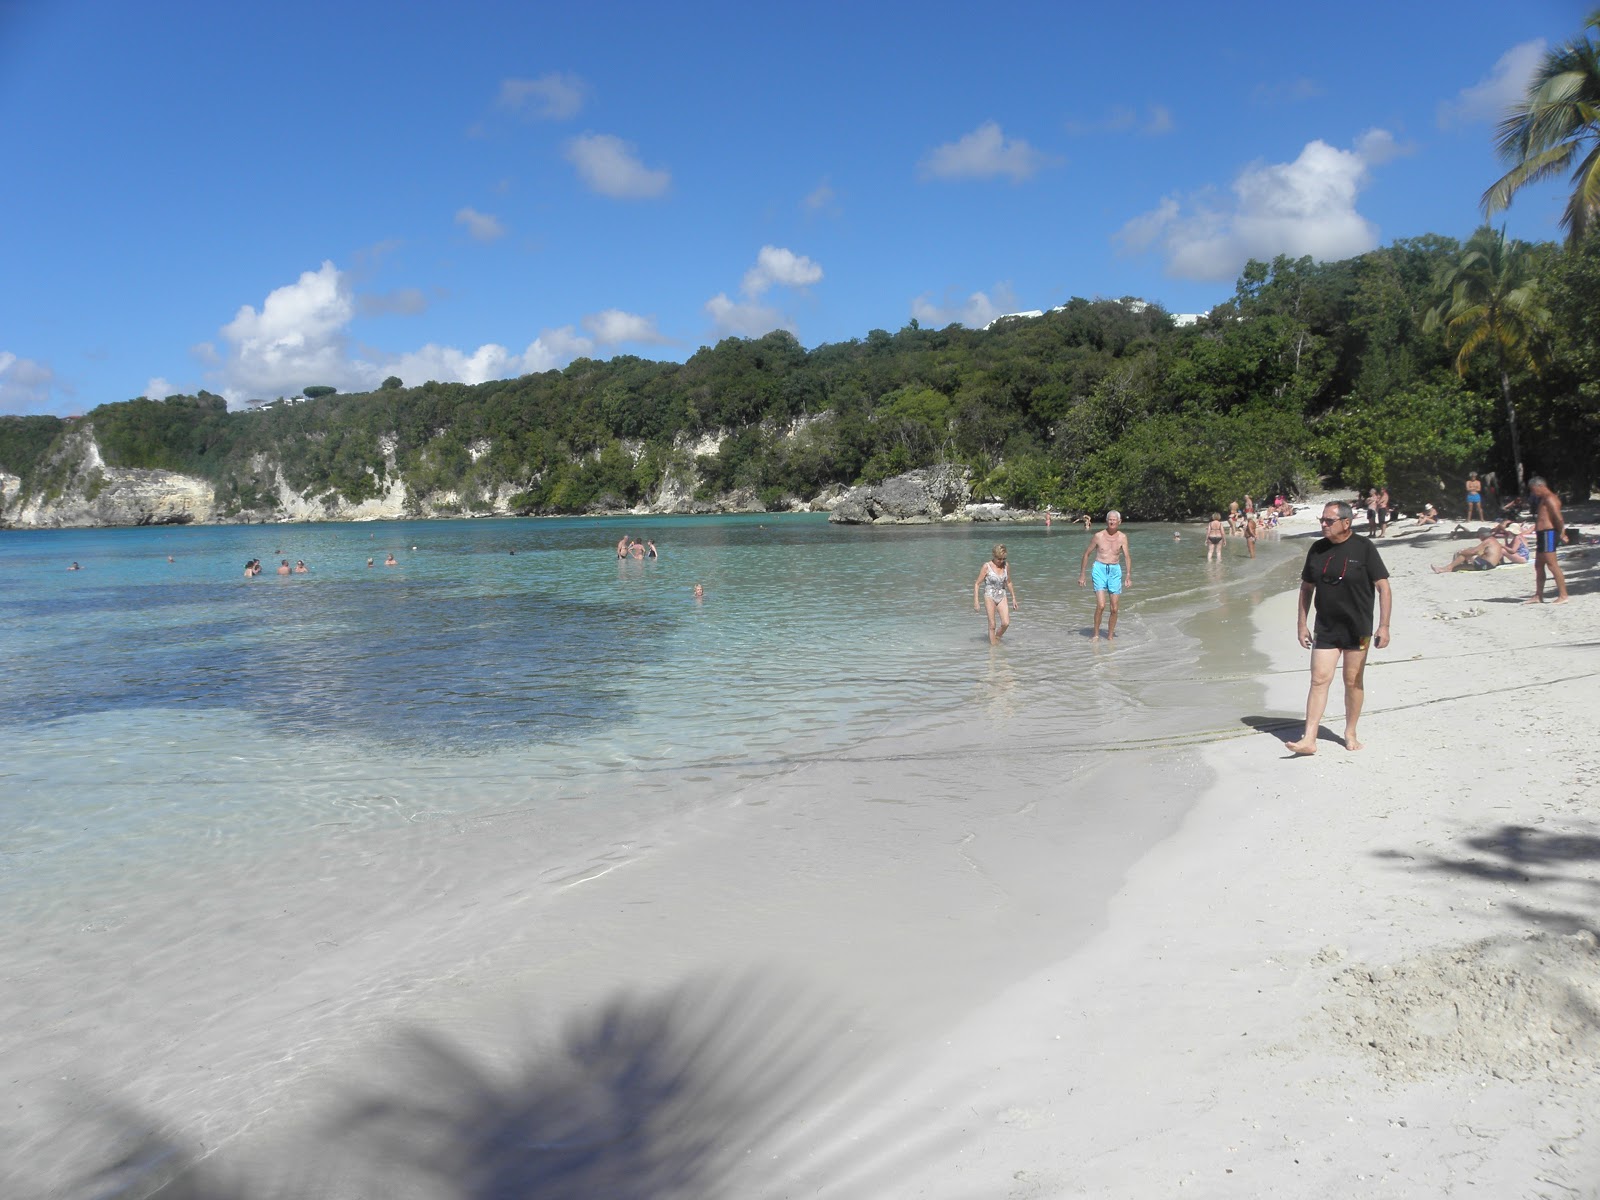 Plage de la Caye d'argent'in fotoğrafı parlak ince kum yüzey ile